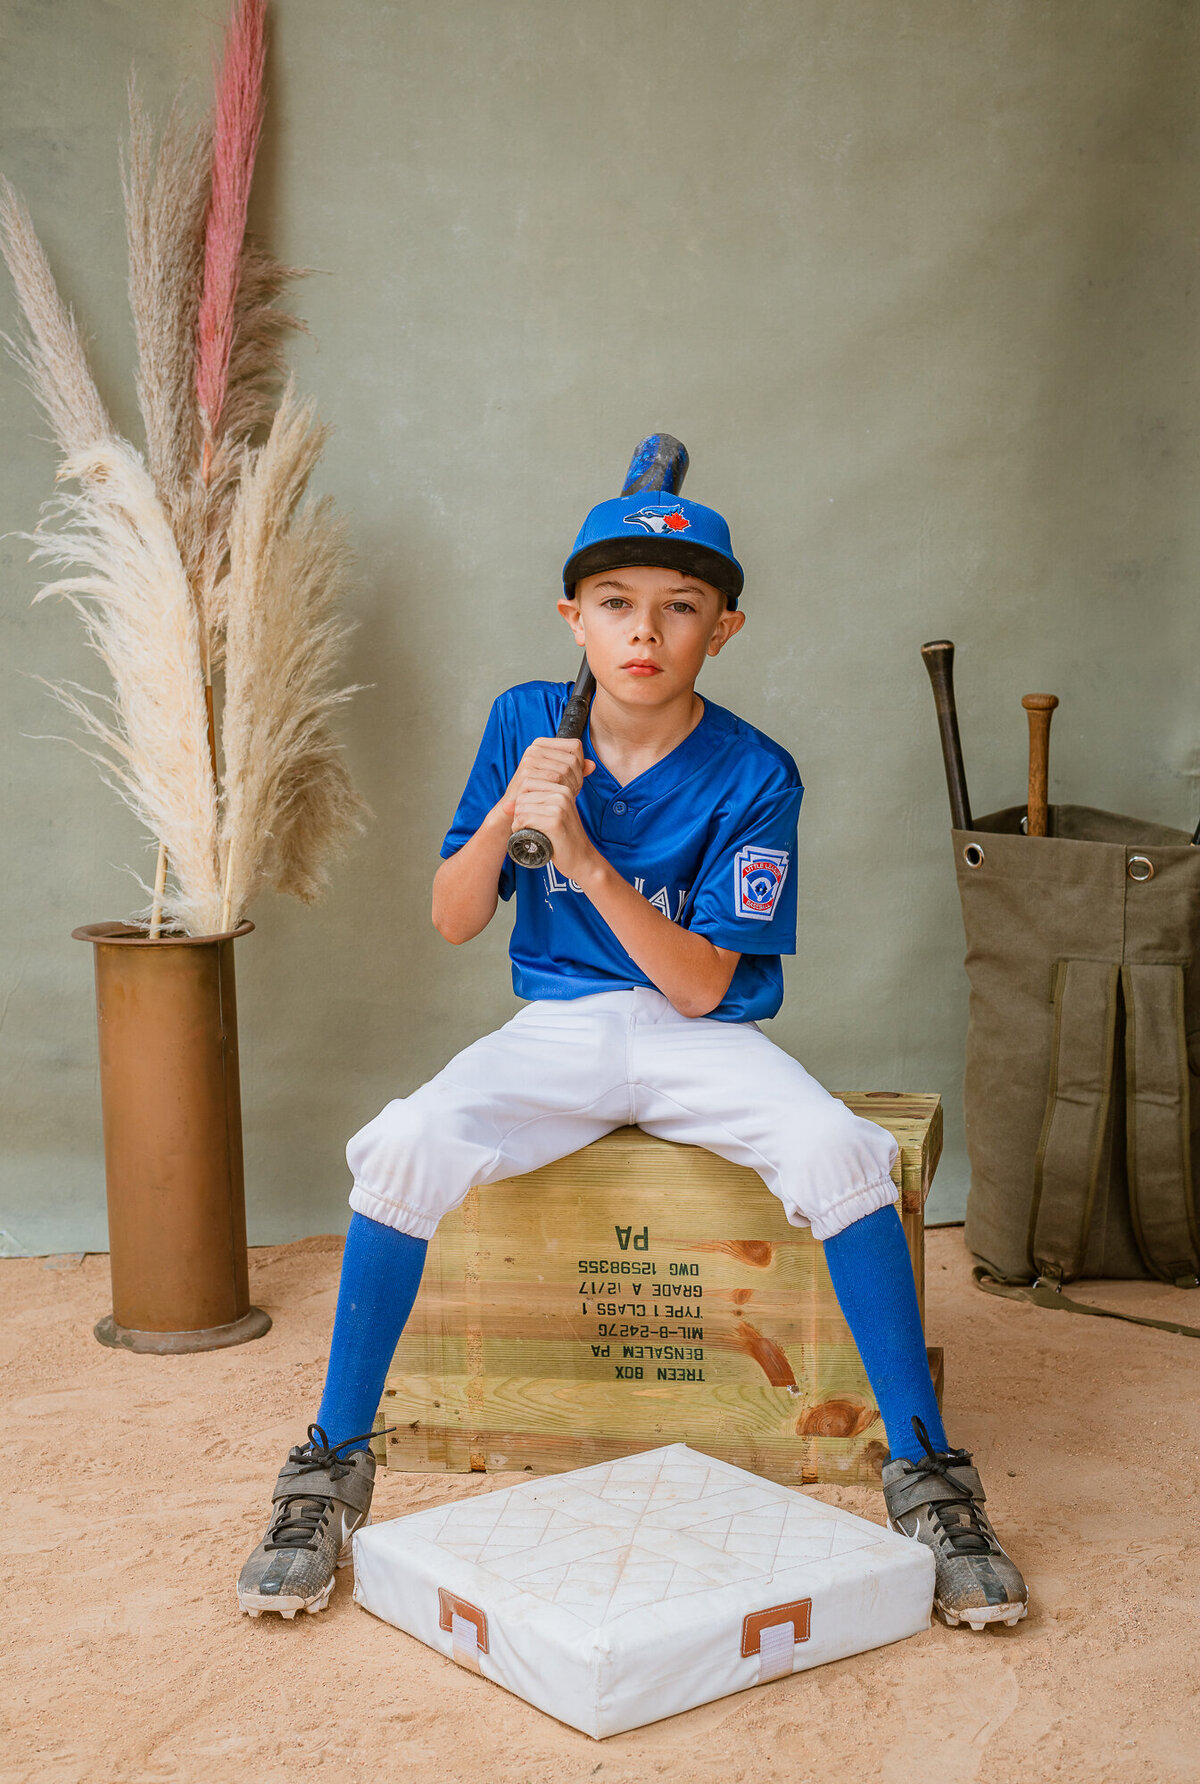 Poway American Little League Portraits | Corey Kennedy Photography